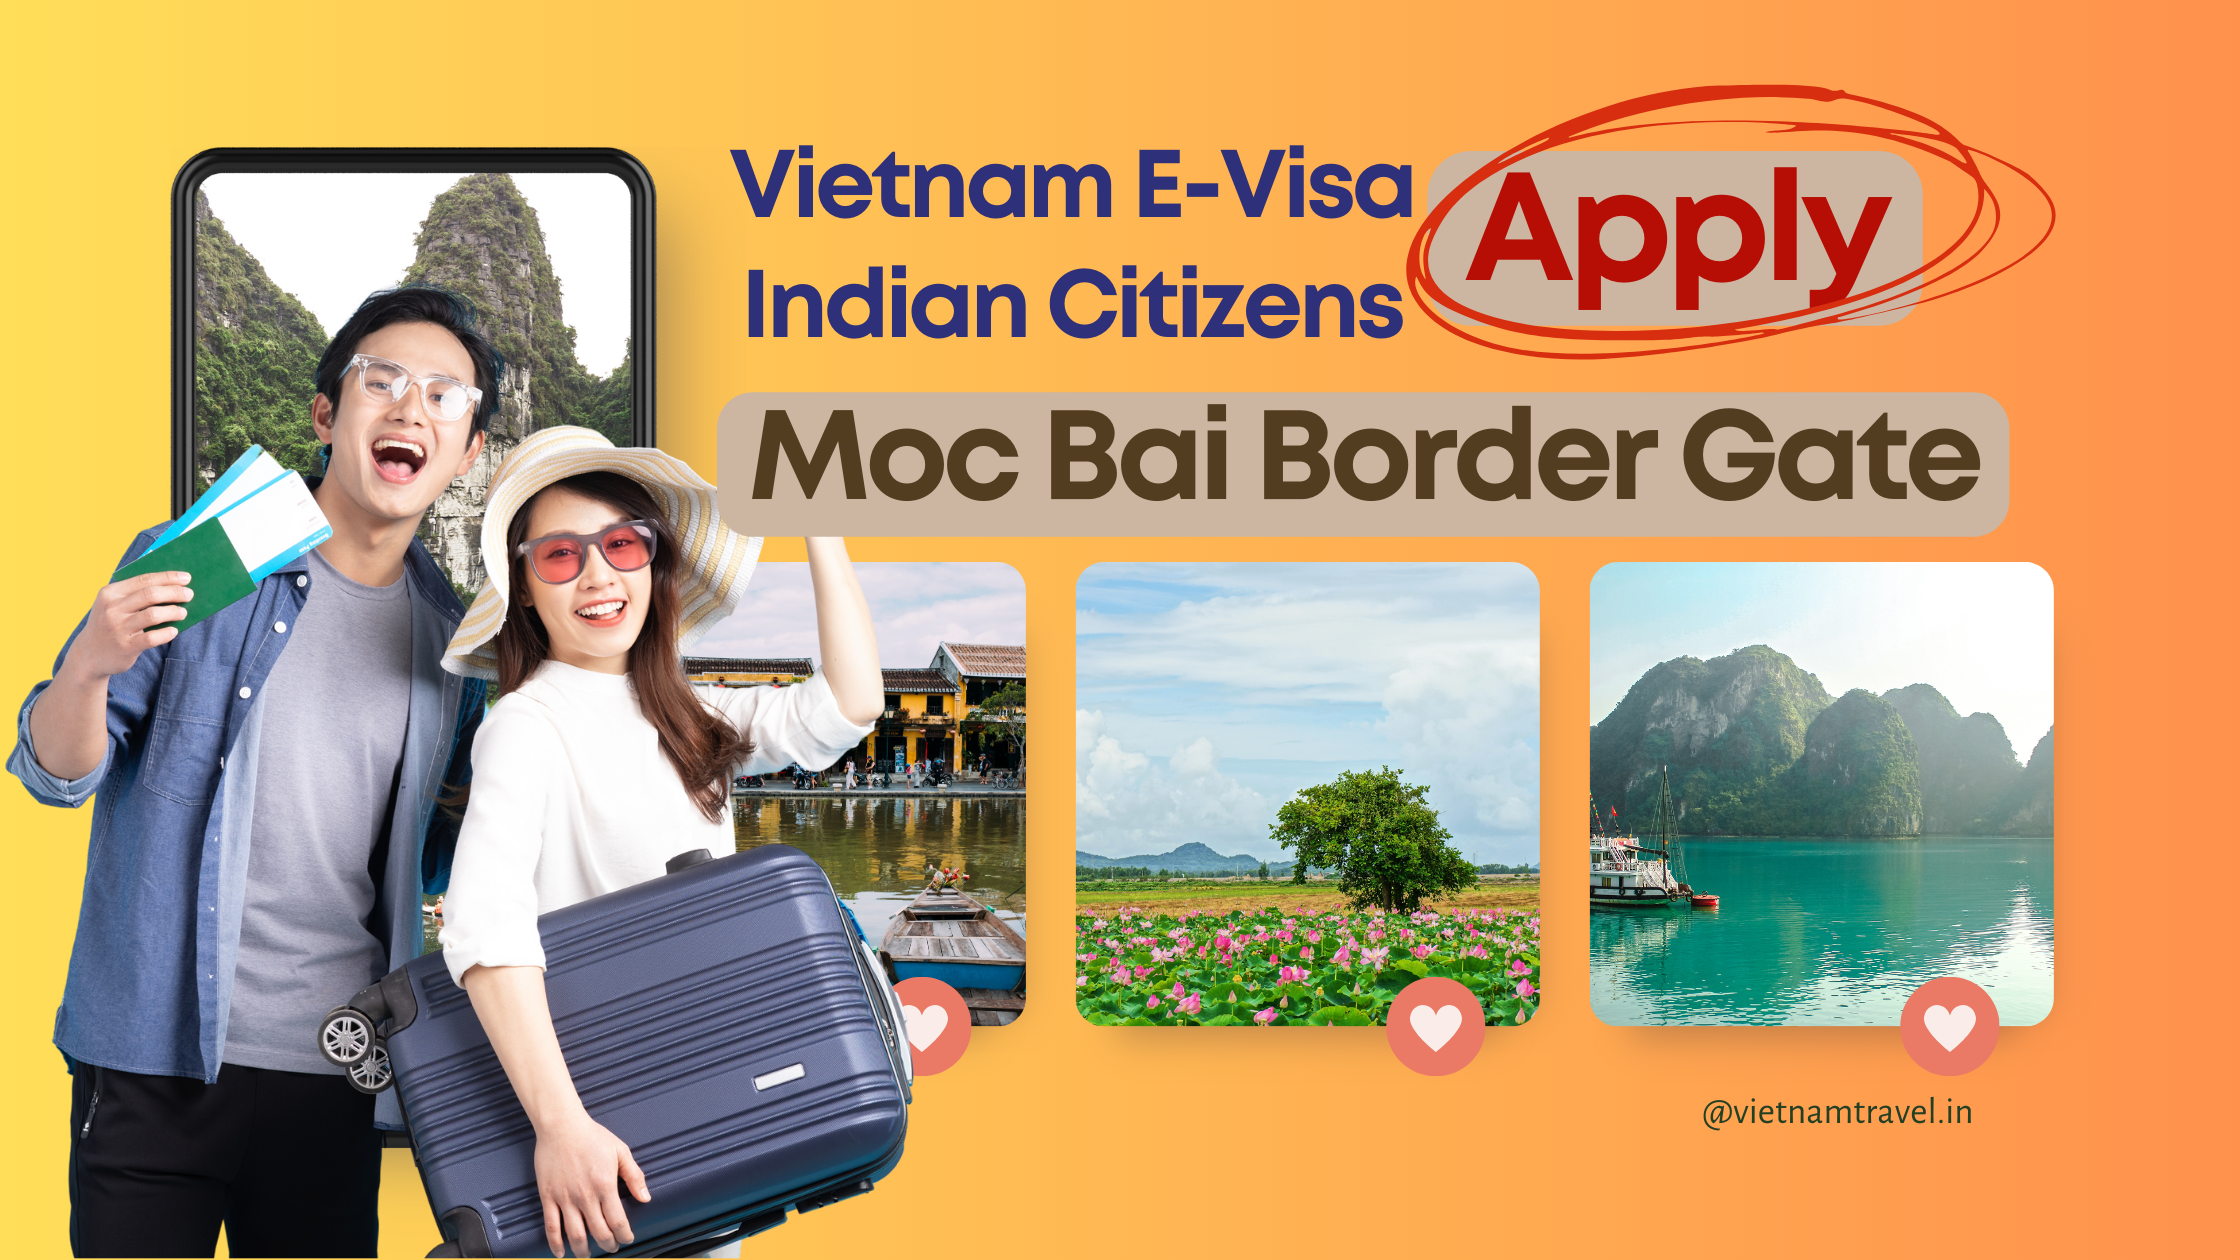 Fast-Track-Applying-for-Vietnam-E-Visa-at-Moc-Bai-Border-Gate-for-Indian-Citizens